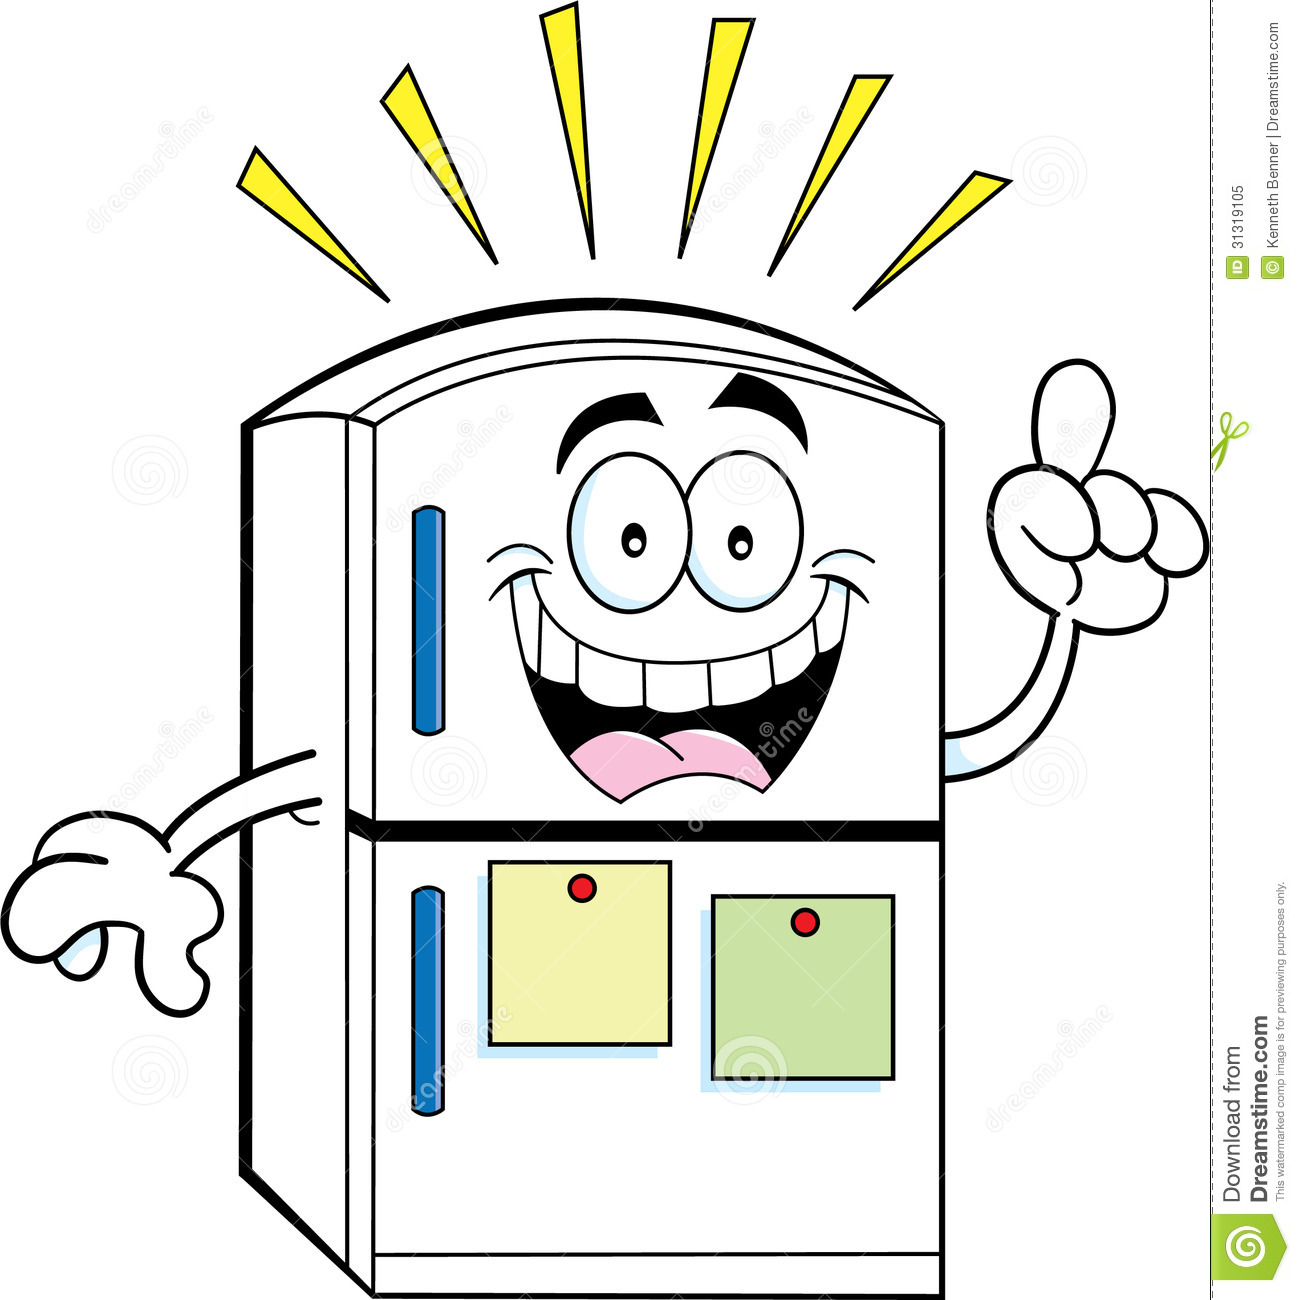 Cartoon Refrigerator With An Idea Royalty Free Stock Photo   Image